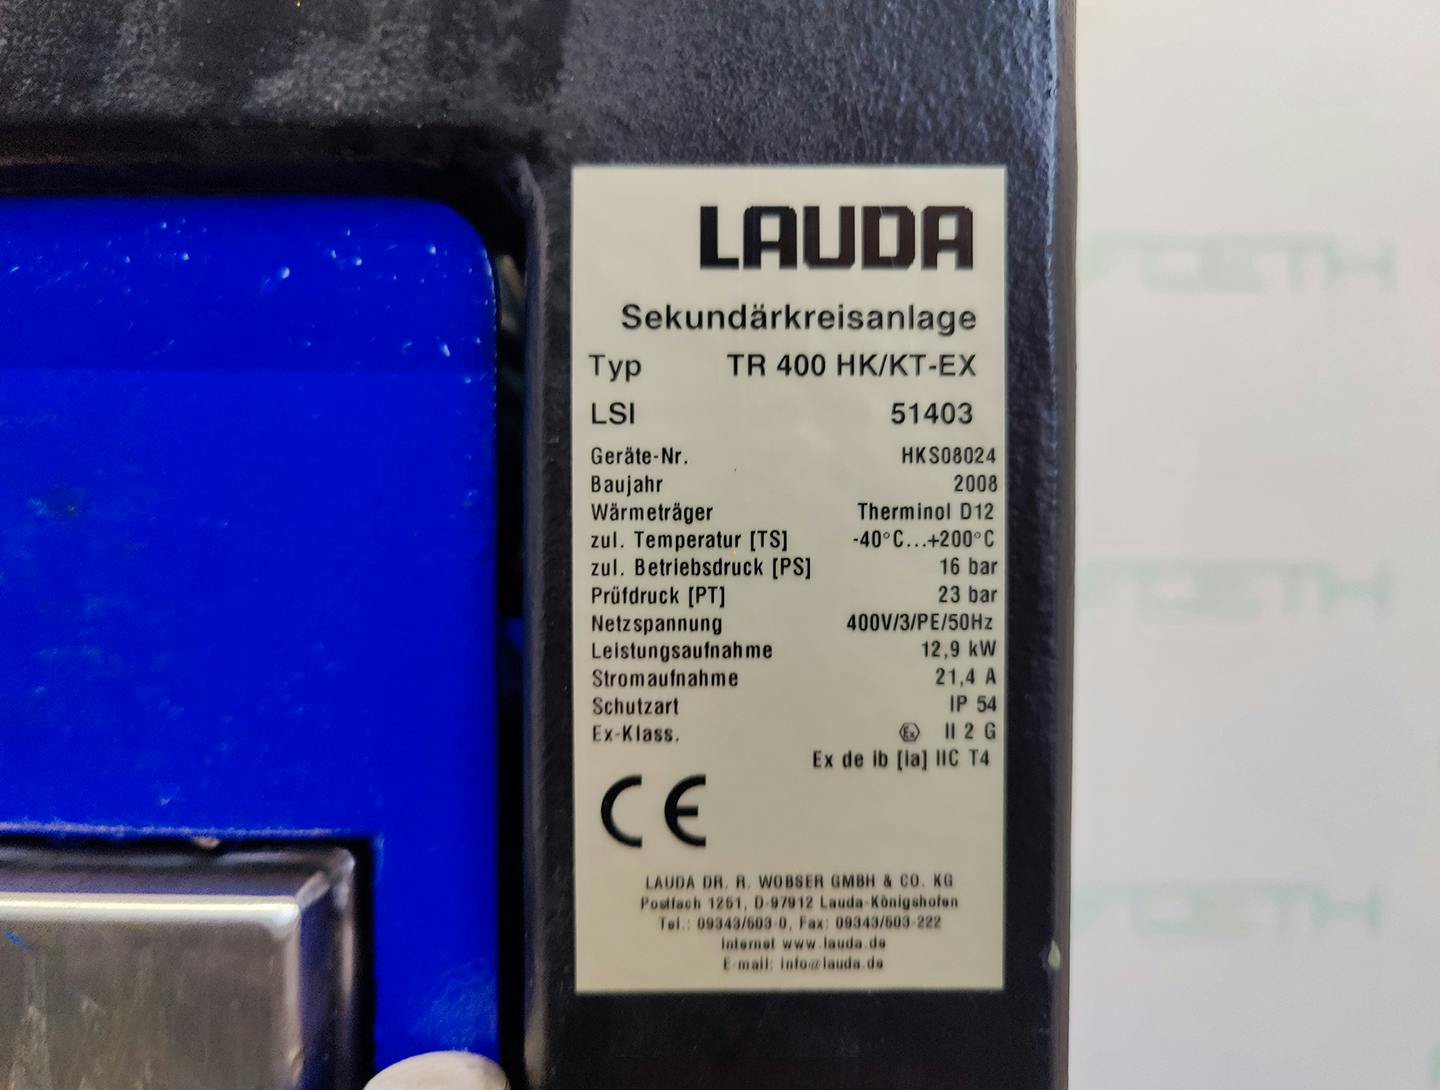 Lauda TR400 HK/KT-EX "secondary circuit system" - Atemperador - image 5